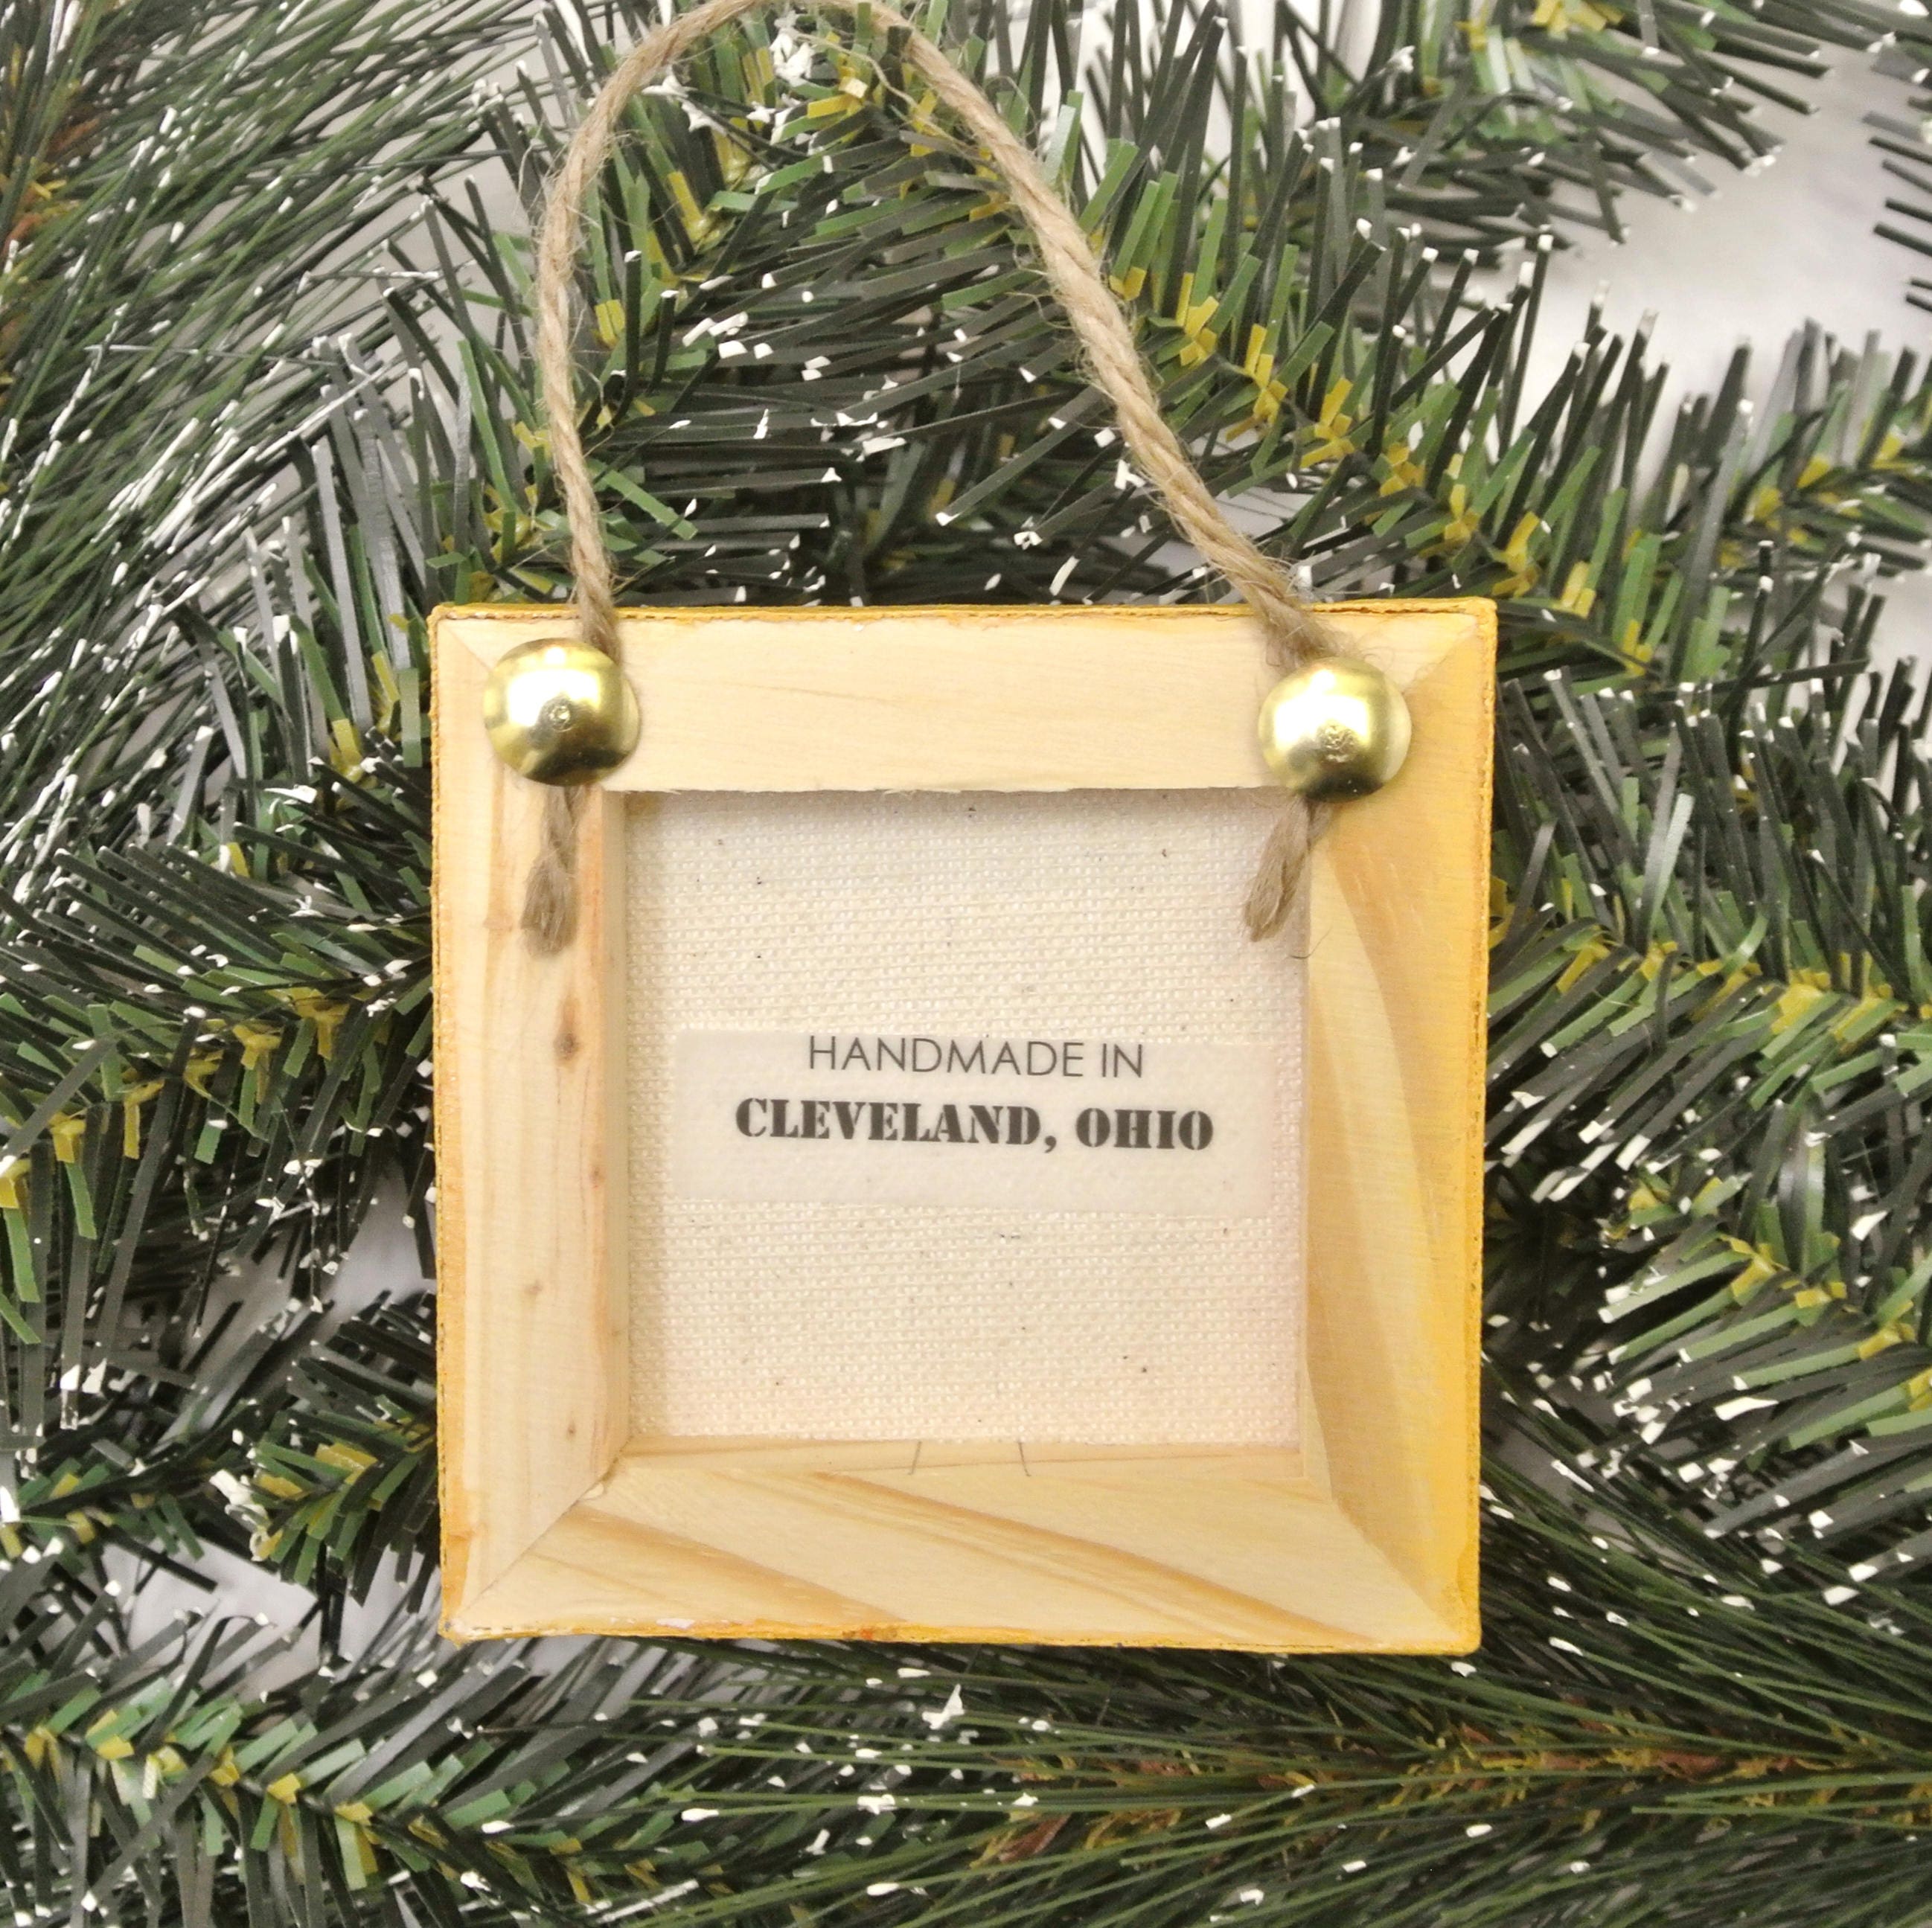 Cleveland Cavaliers Vintage Ornament Custom Name - Teespix - Store